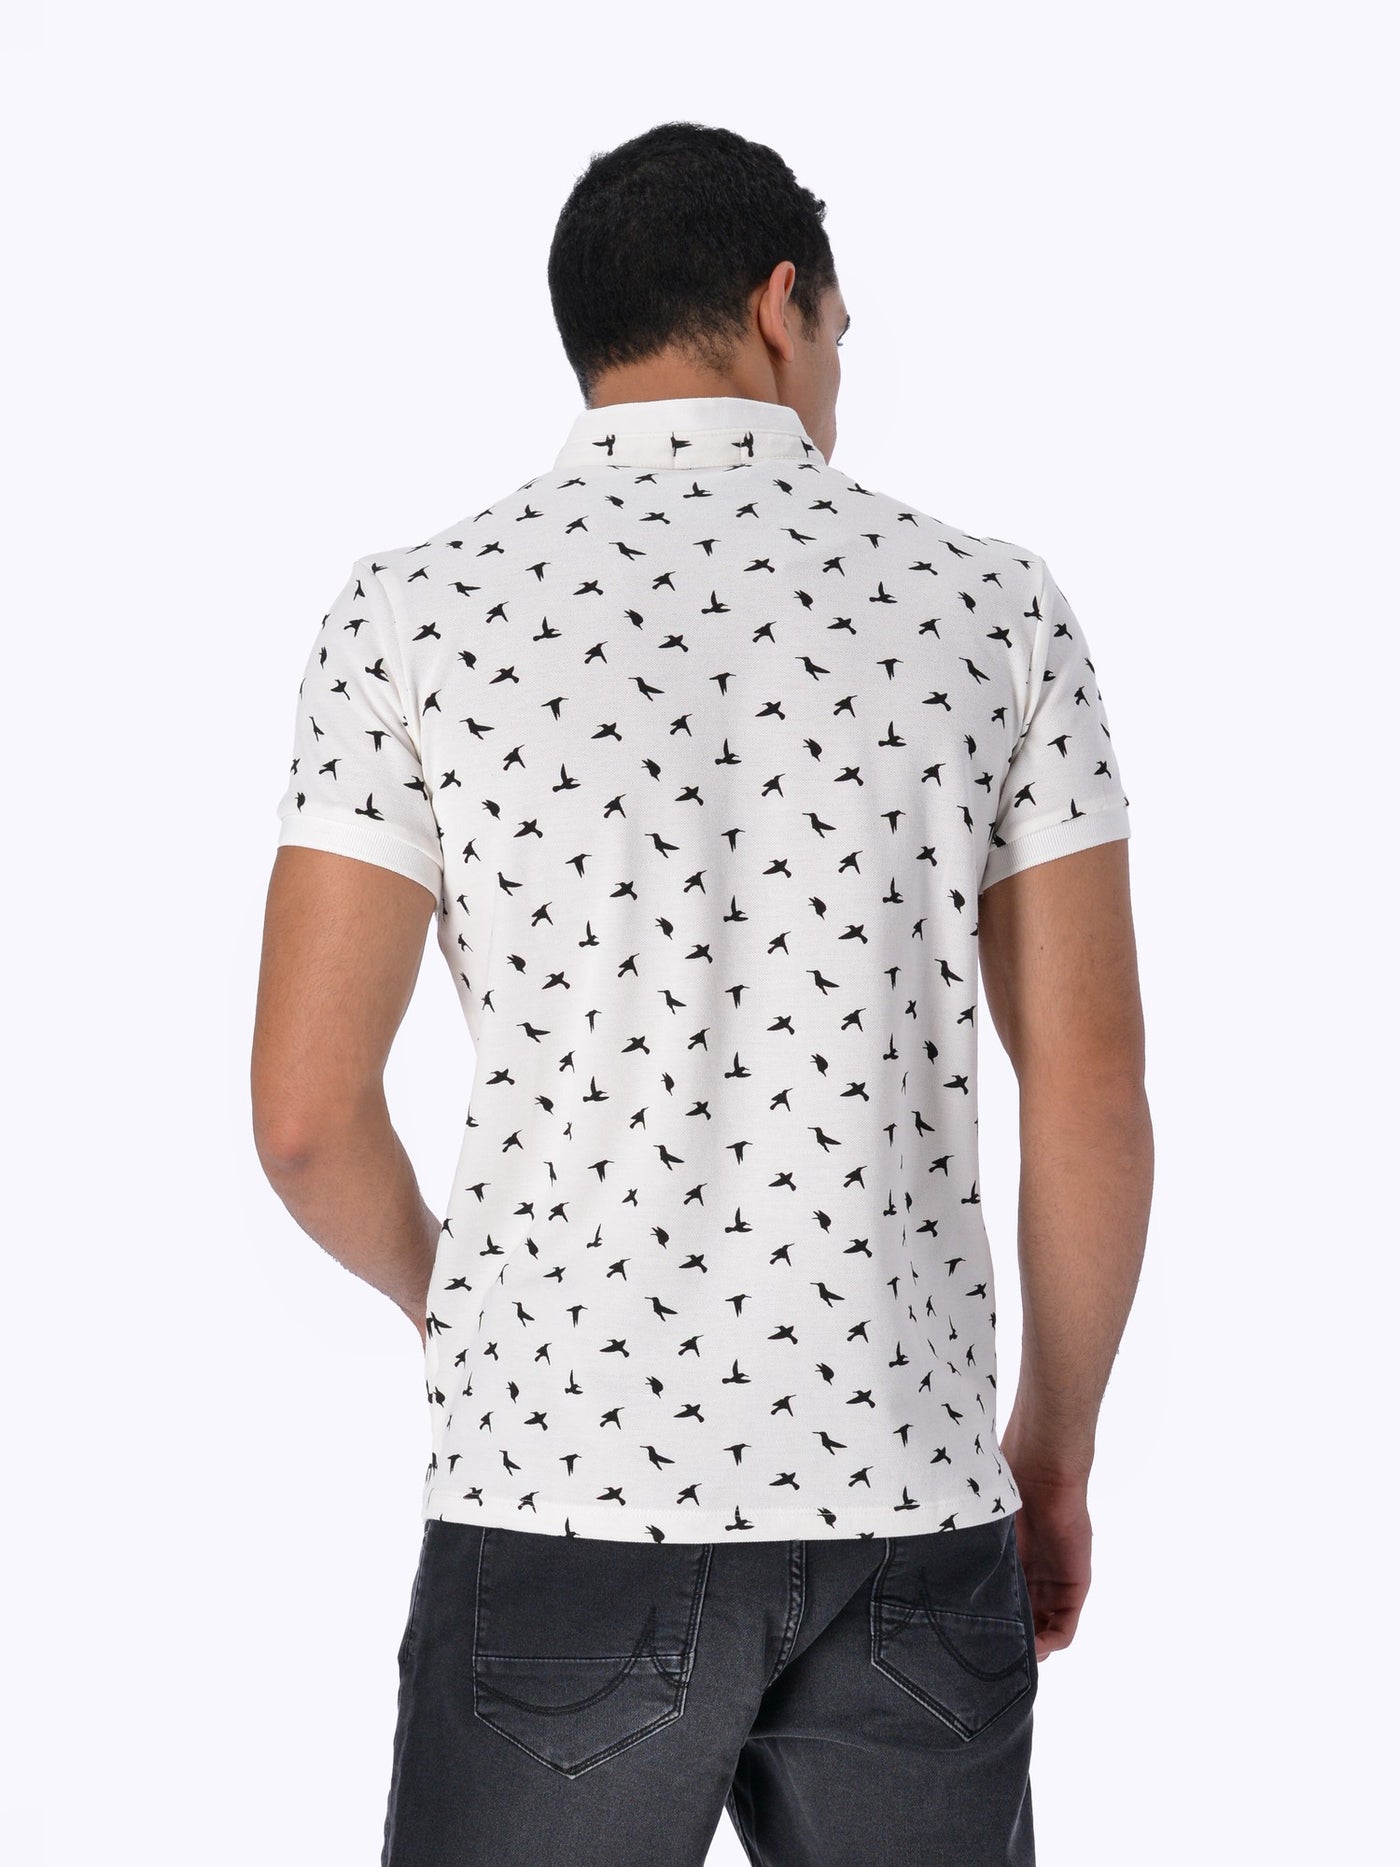 OR Men's All Over Bird Print T-Shirt